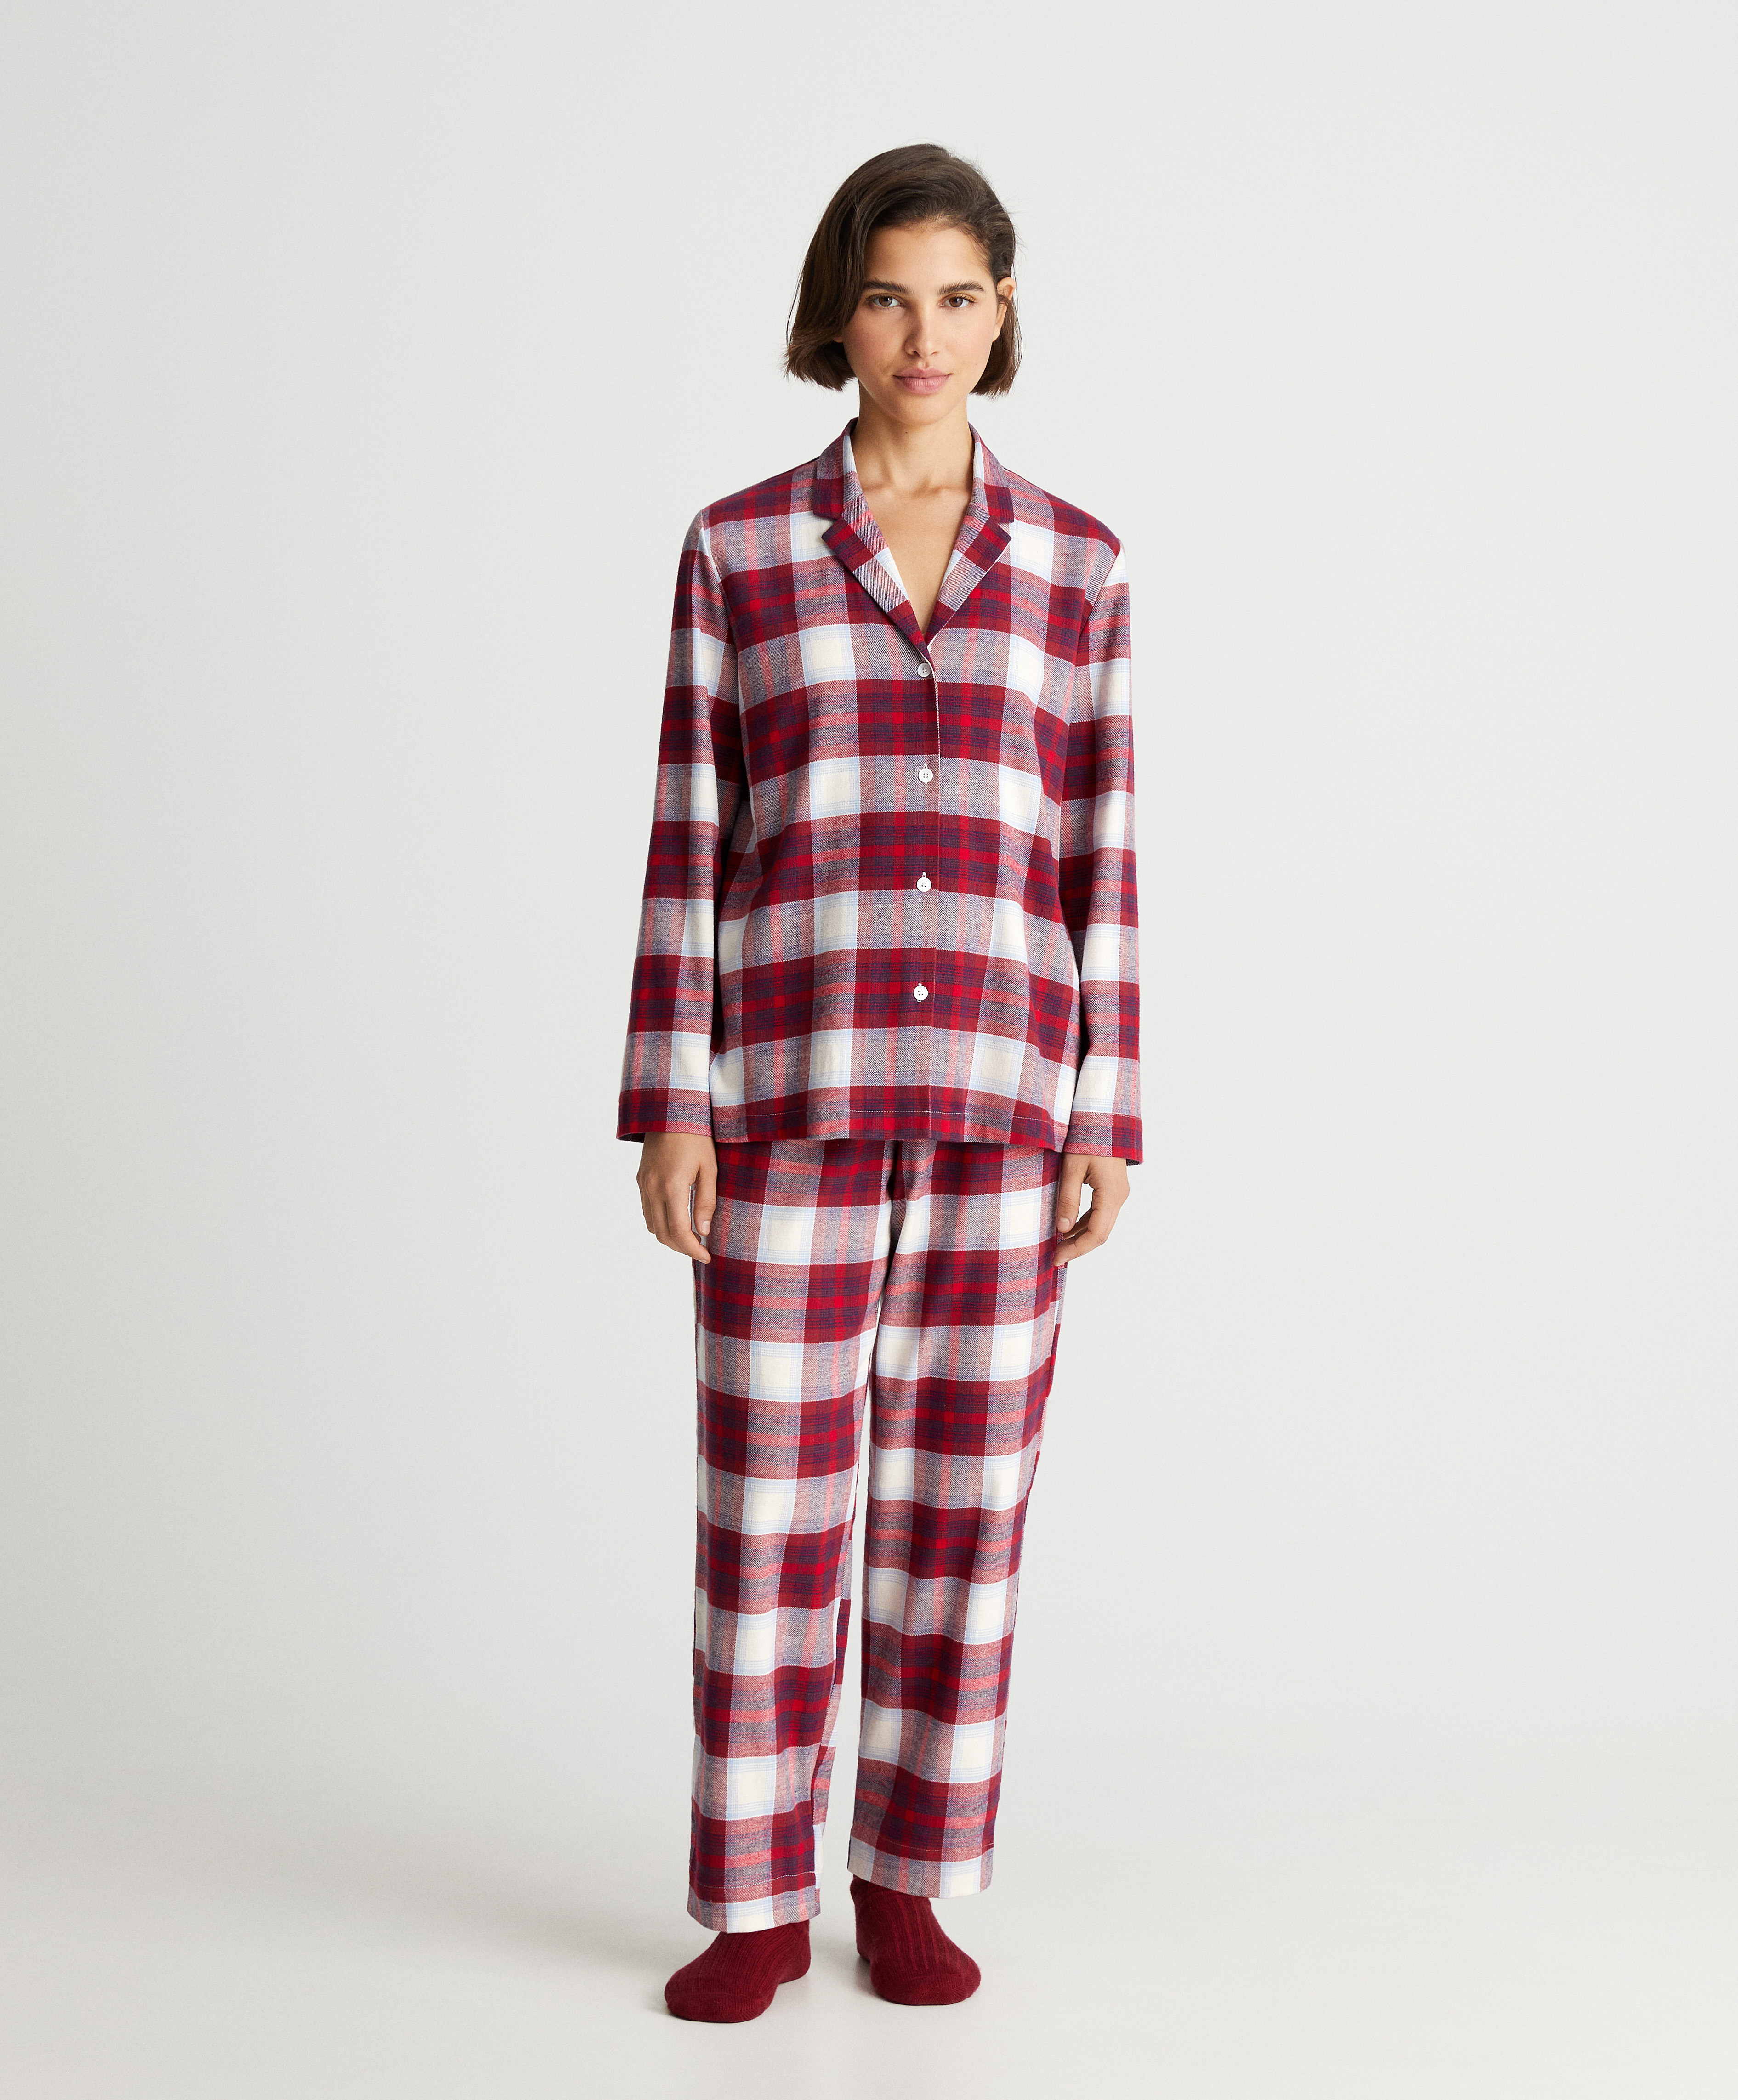 Zweiteiliger langer Extrawarm-Hemdpyjama mit Karomuster